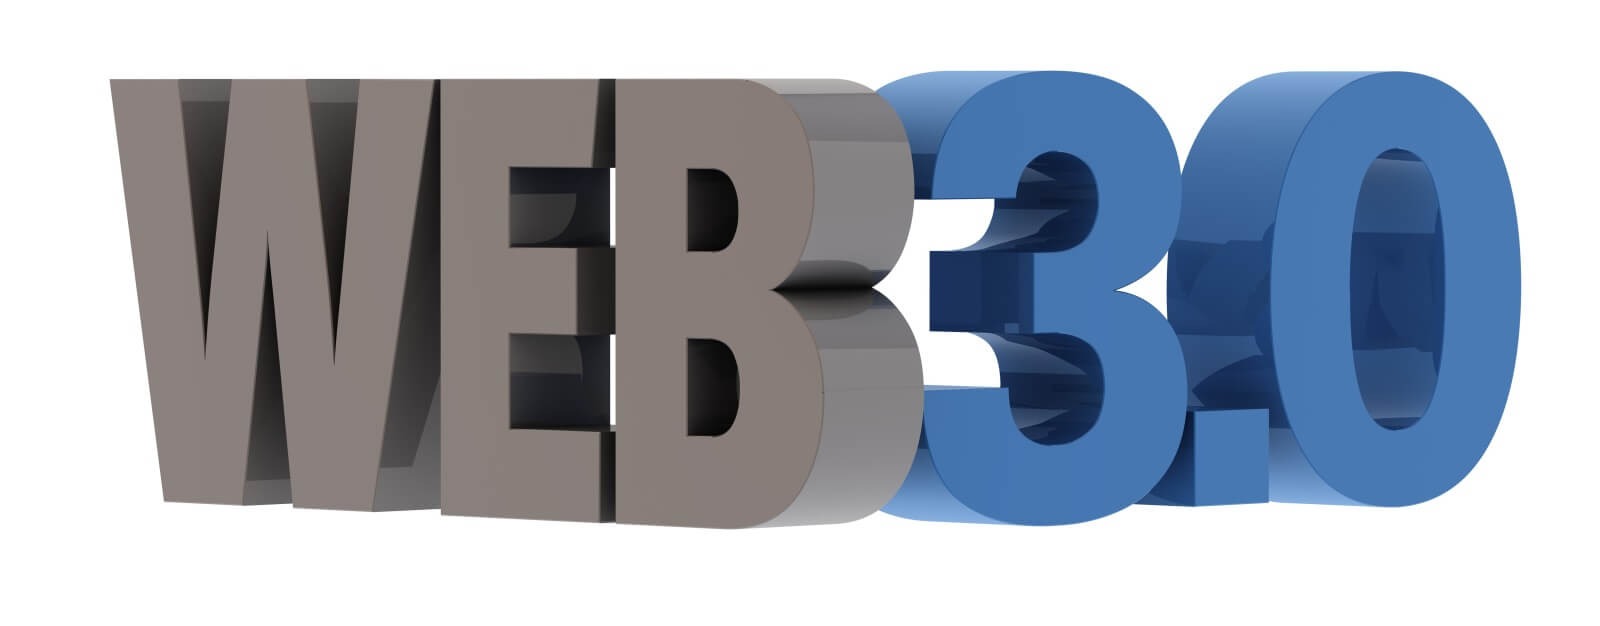 3 0 003. Web3. Веб 3.0. Web3 картинка. Web3 логотип.